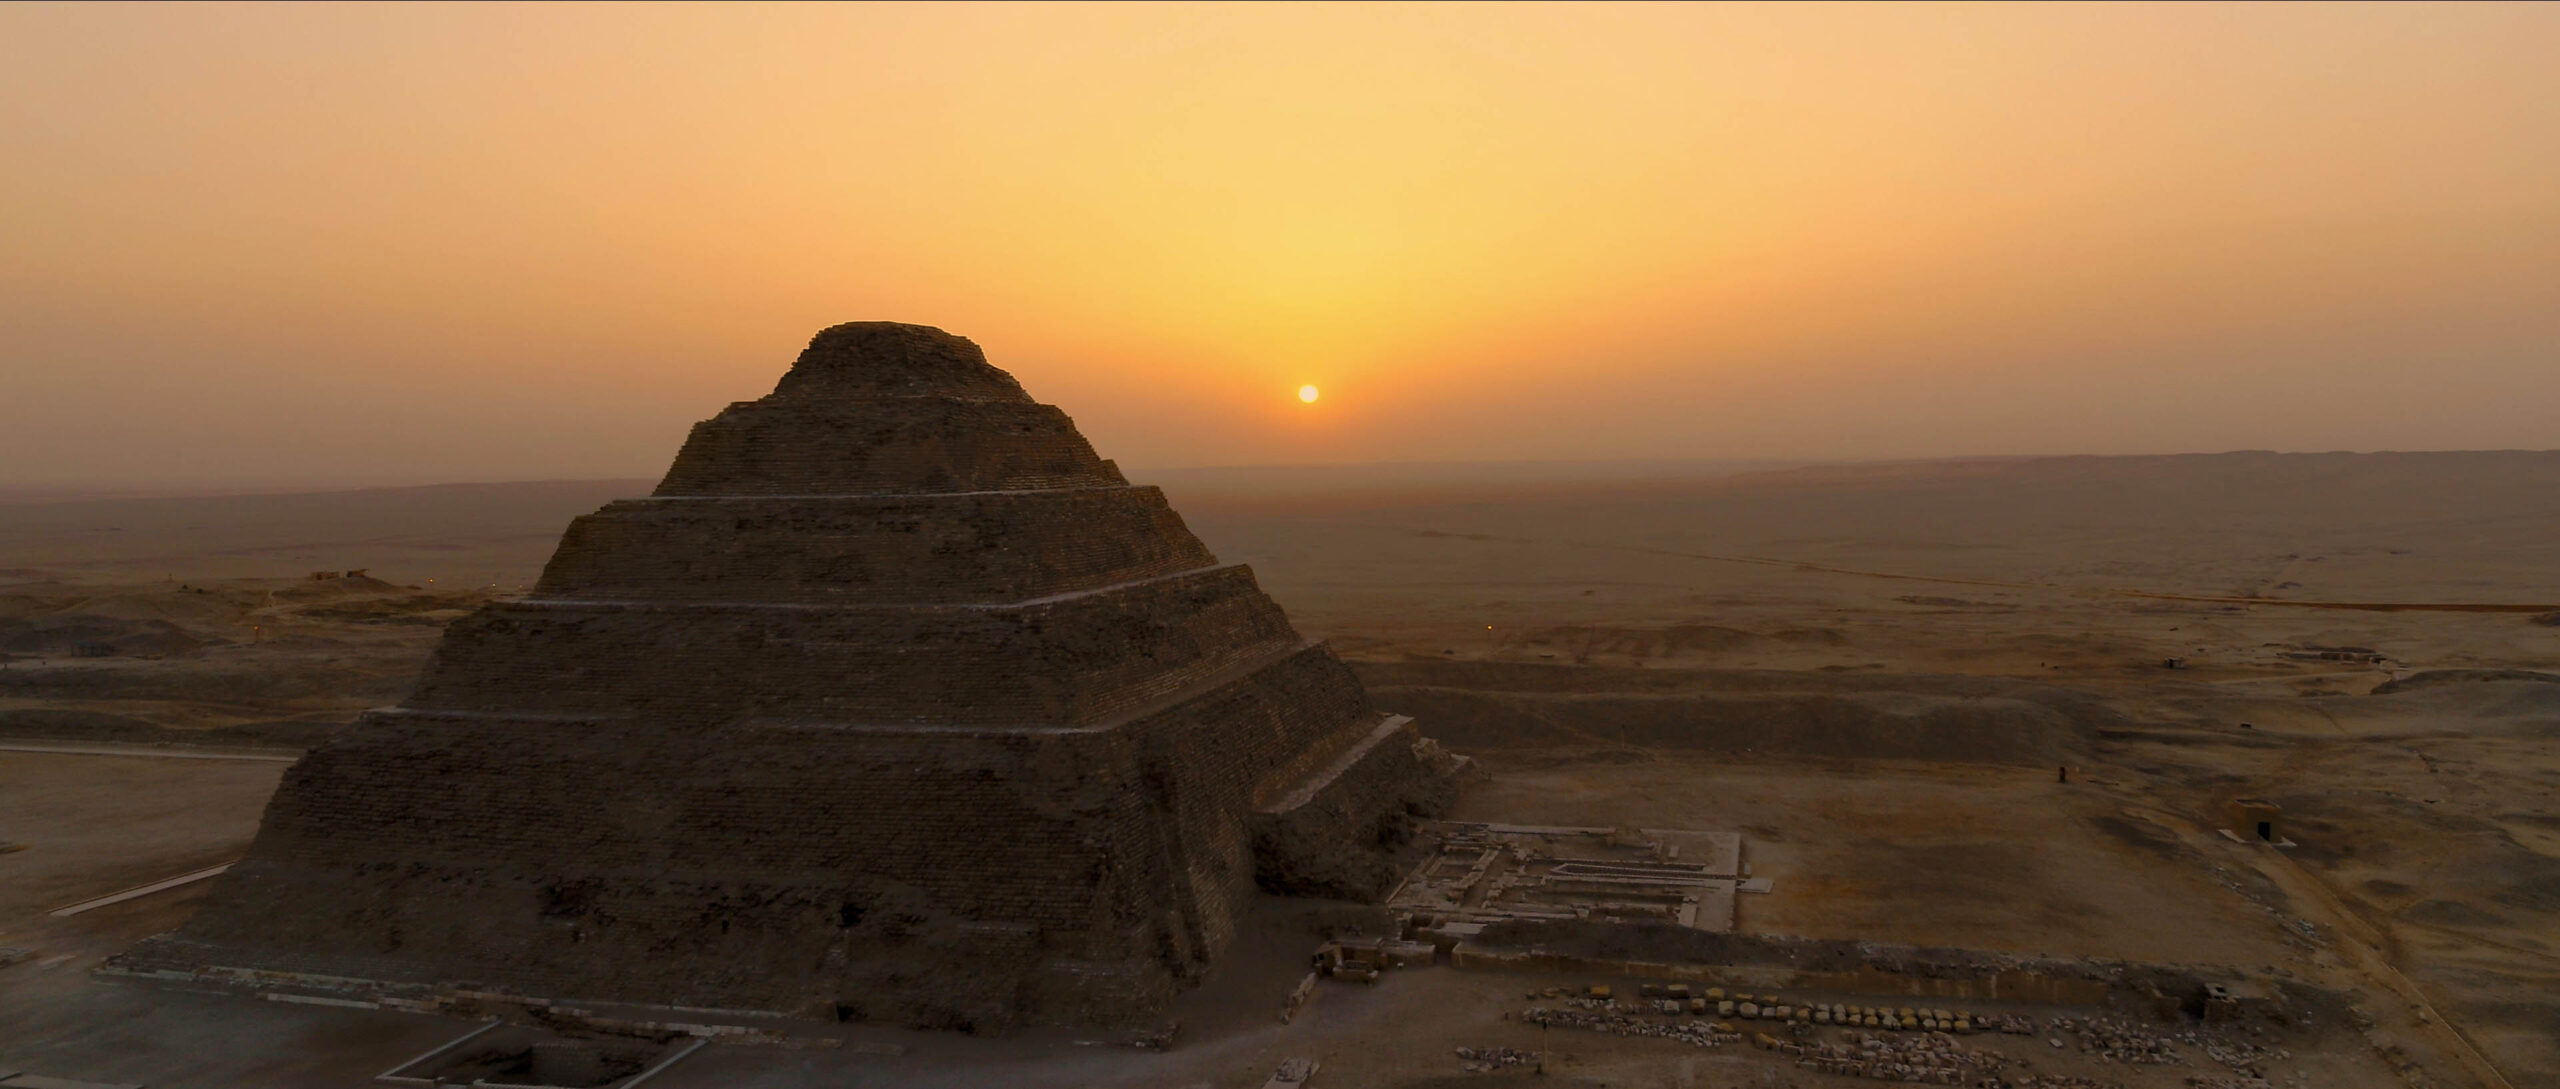 Unknown: La piramide perduta - Immagine dal set [credit: courtesy of Netflix]